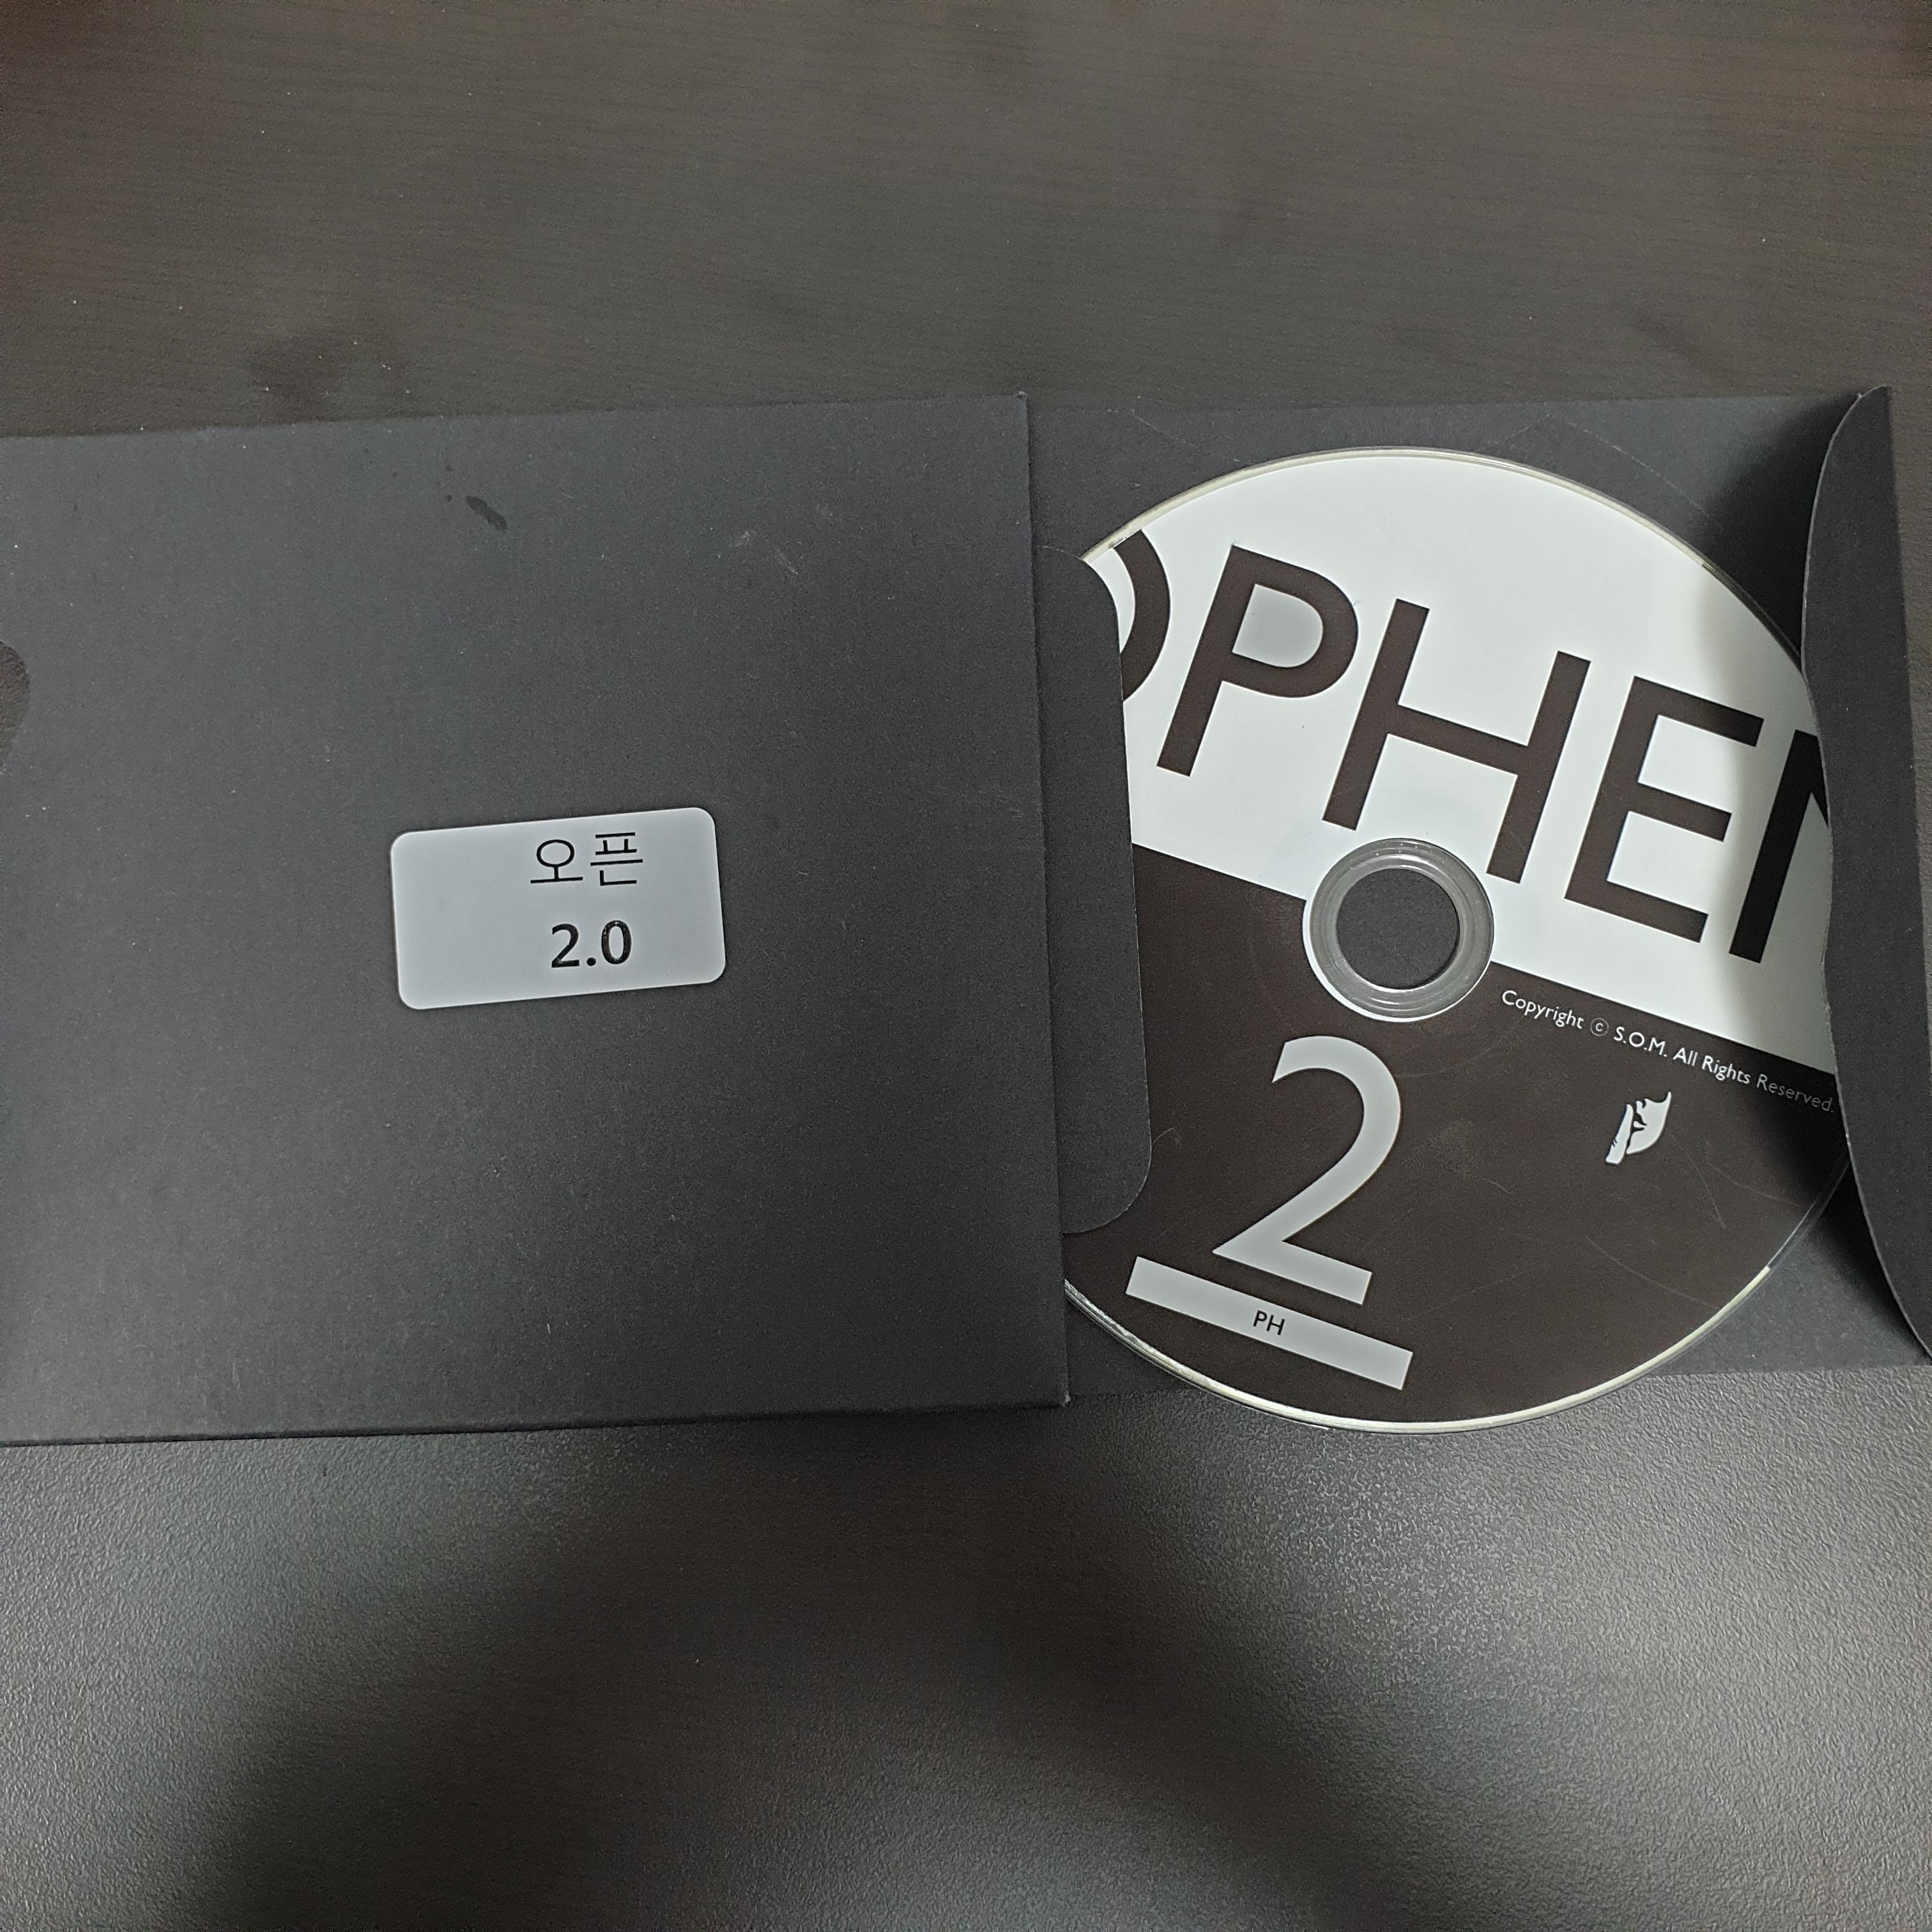 PH OPHEN 2.0 오픈 2.0 구성물